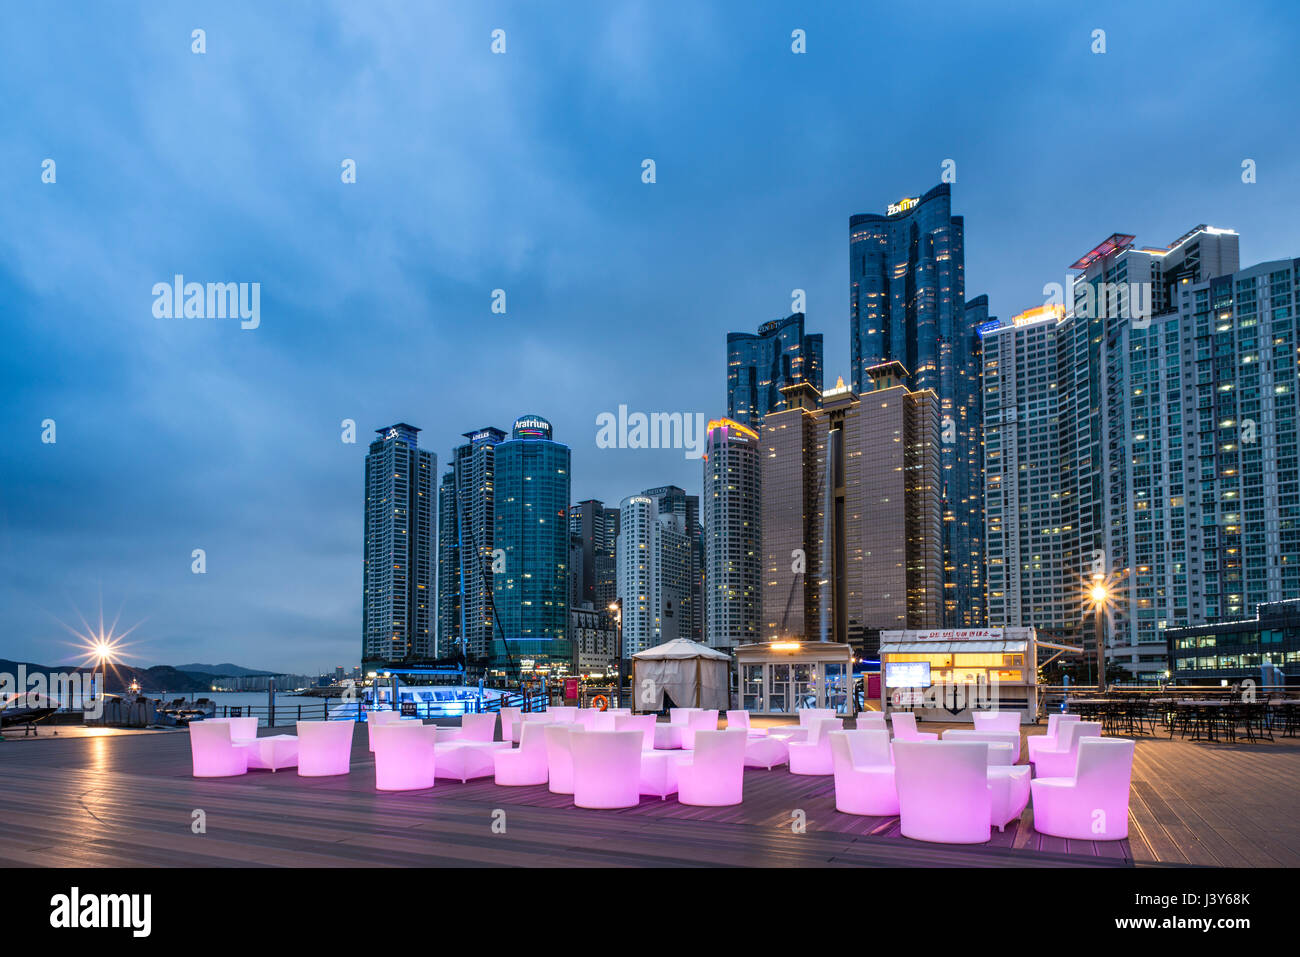 Luxury high rise apartment buildings in Marine City, Haeundae District, Busan Gwangyeoksi, South Korea Stock Photo